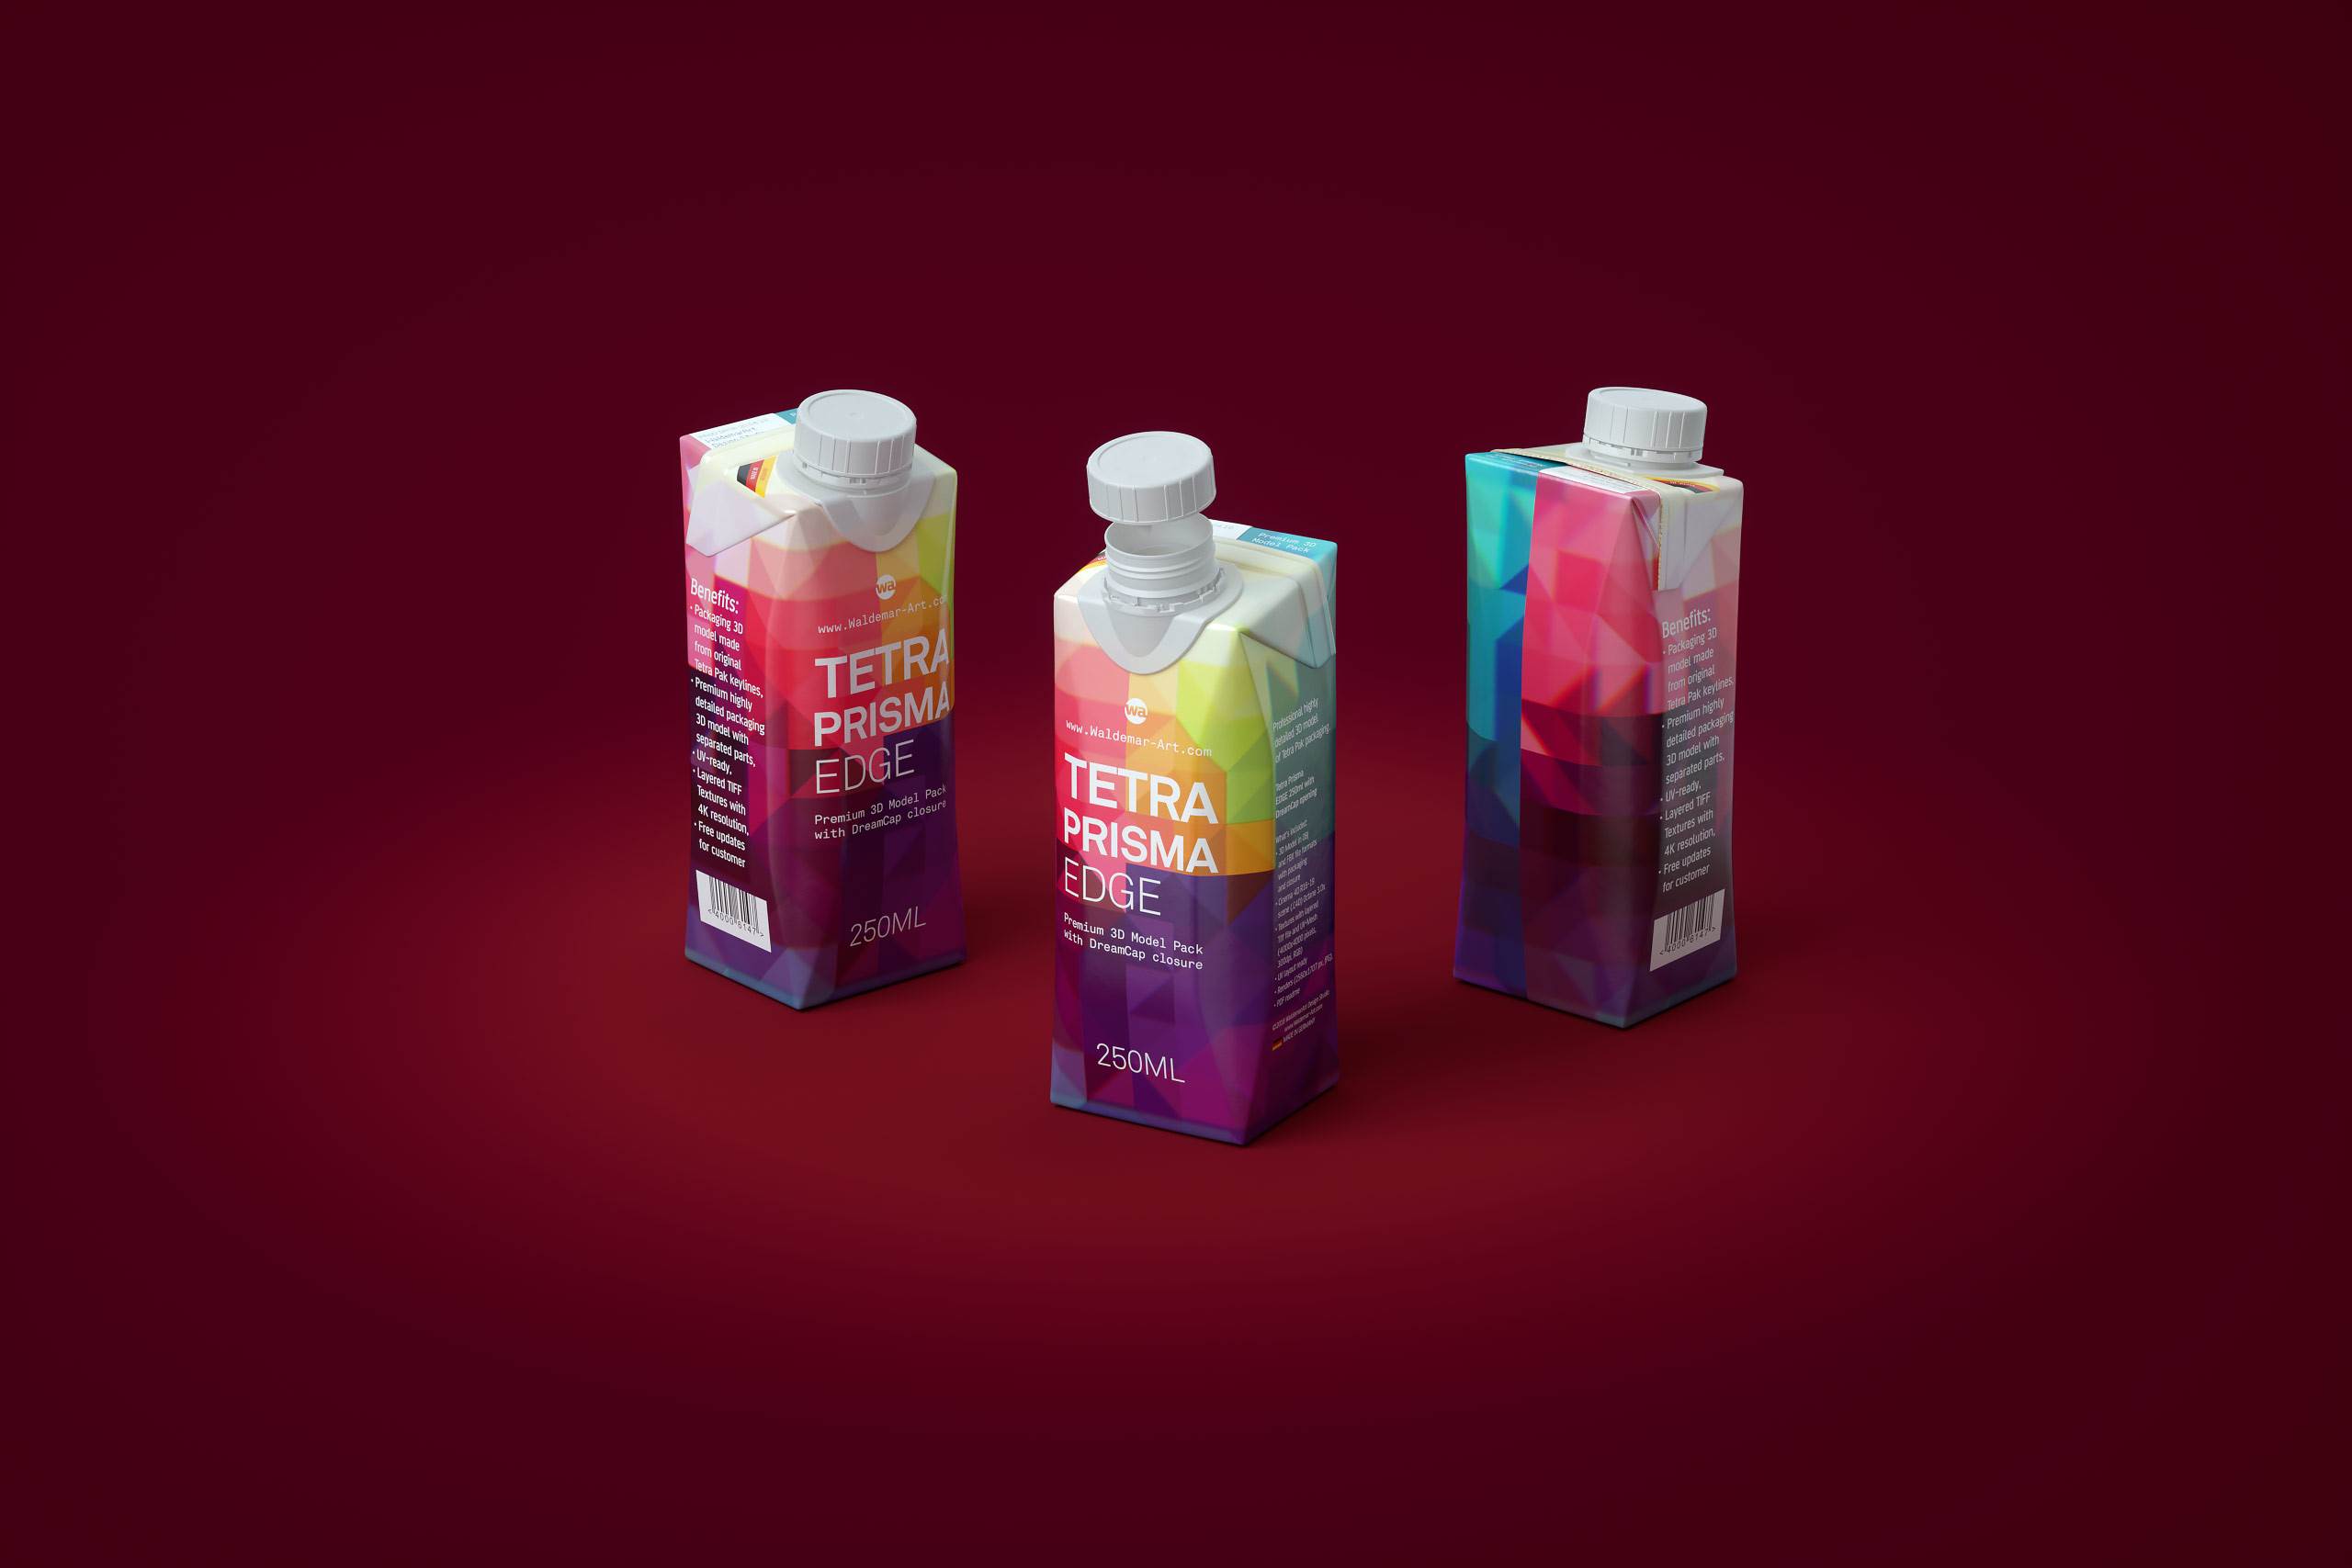 Tetra Pack Prisma Edge 250ml Premium Carton Packaging 3d Model Pak Wa